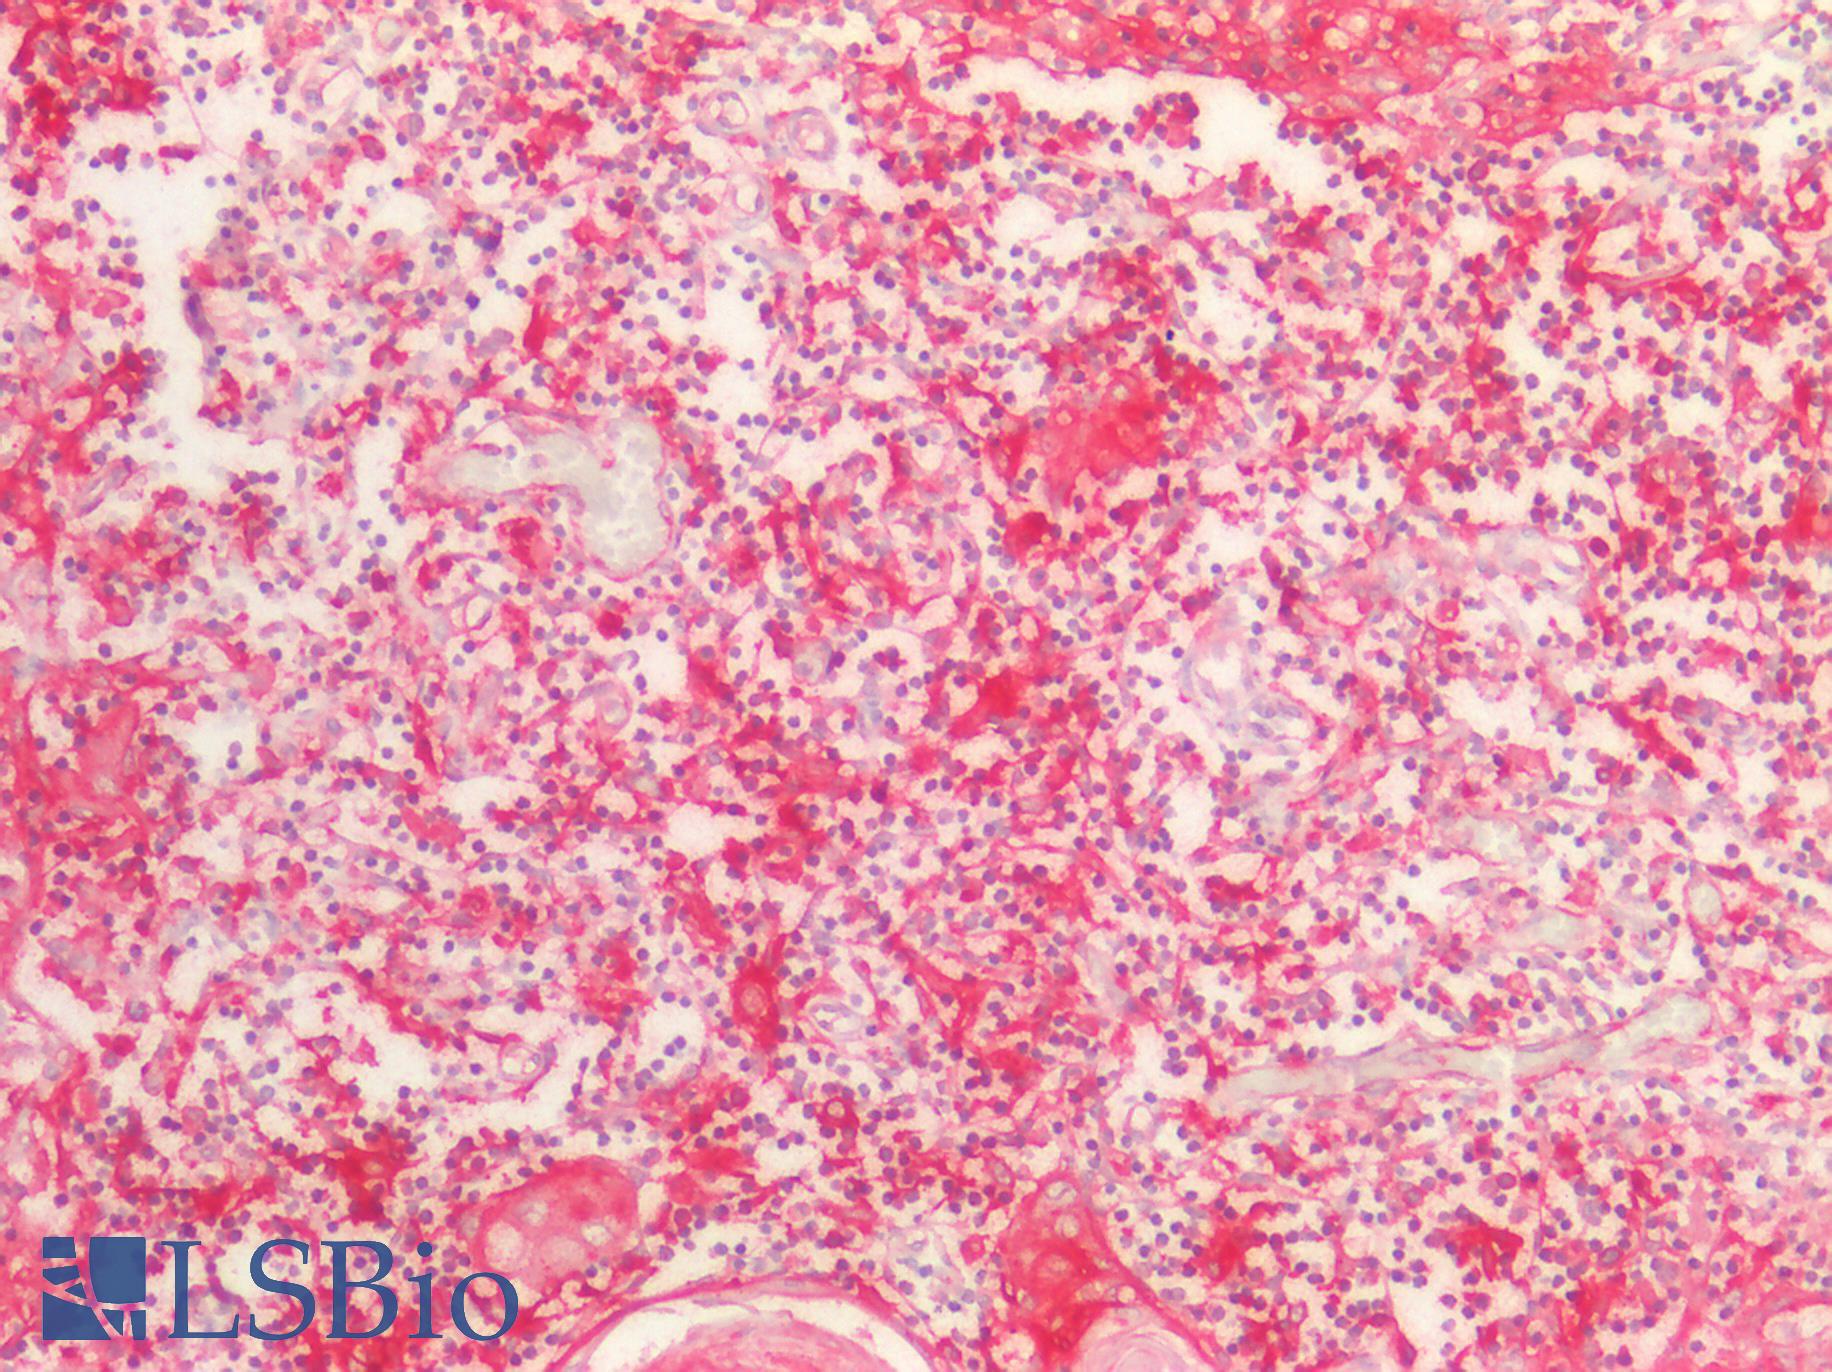 BMP8B Antibody - Human Thymus: Formalin-Fixed, Paraffin-Embedded (FFPE)